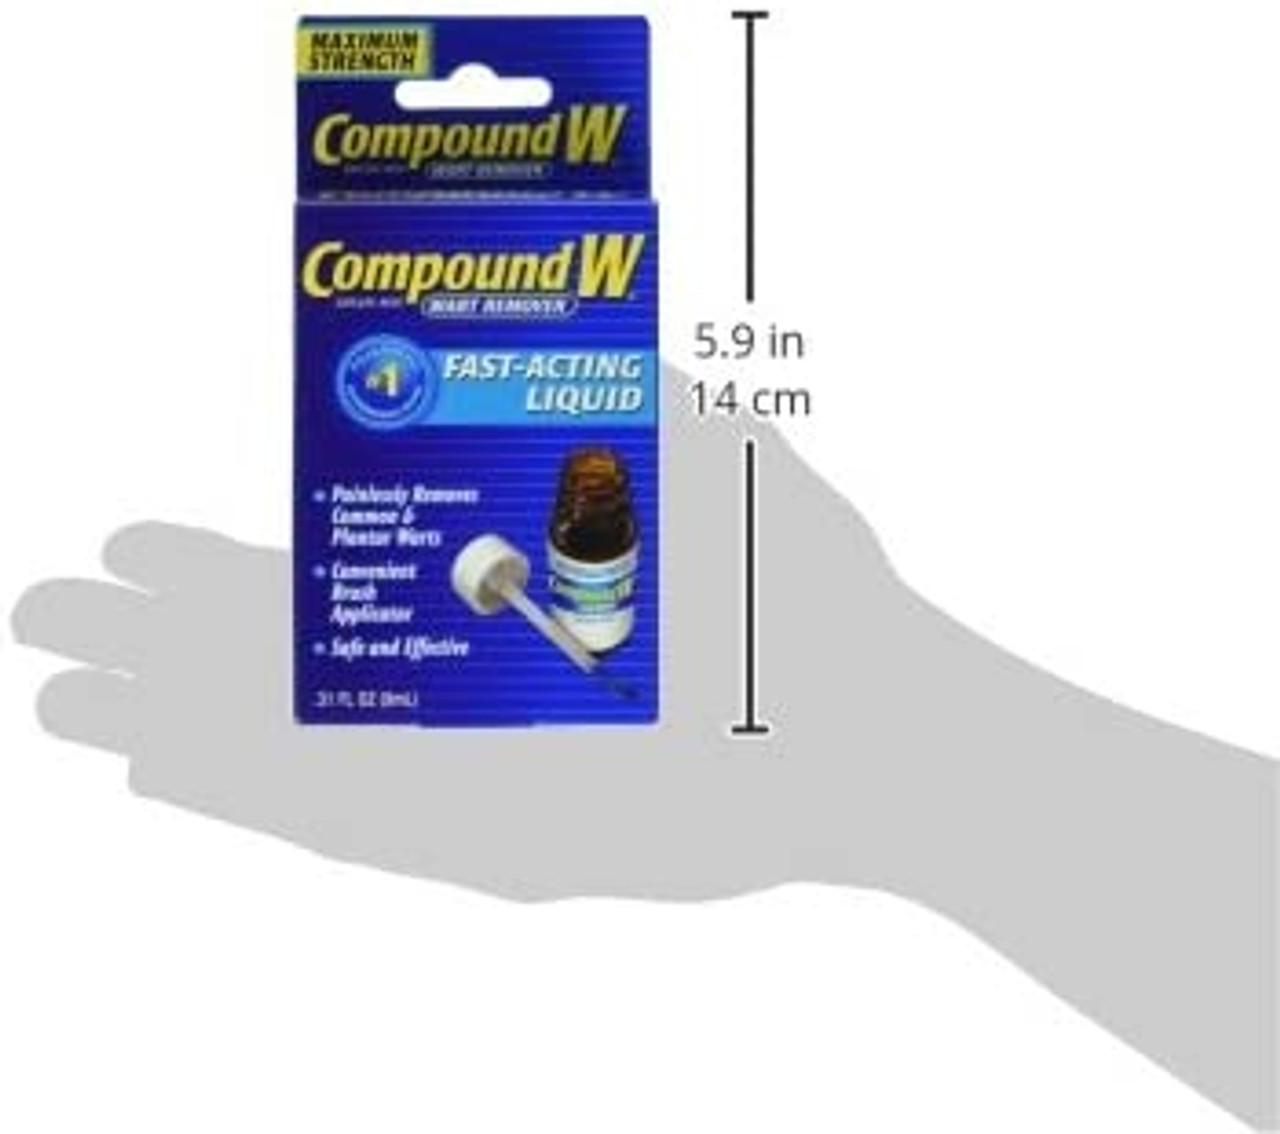 Compound W Maximum Strength Fast Acting Liquid Wart Remover, 0.31 fl oz 